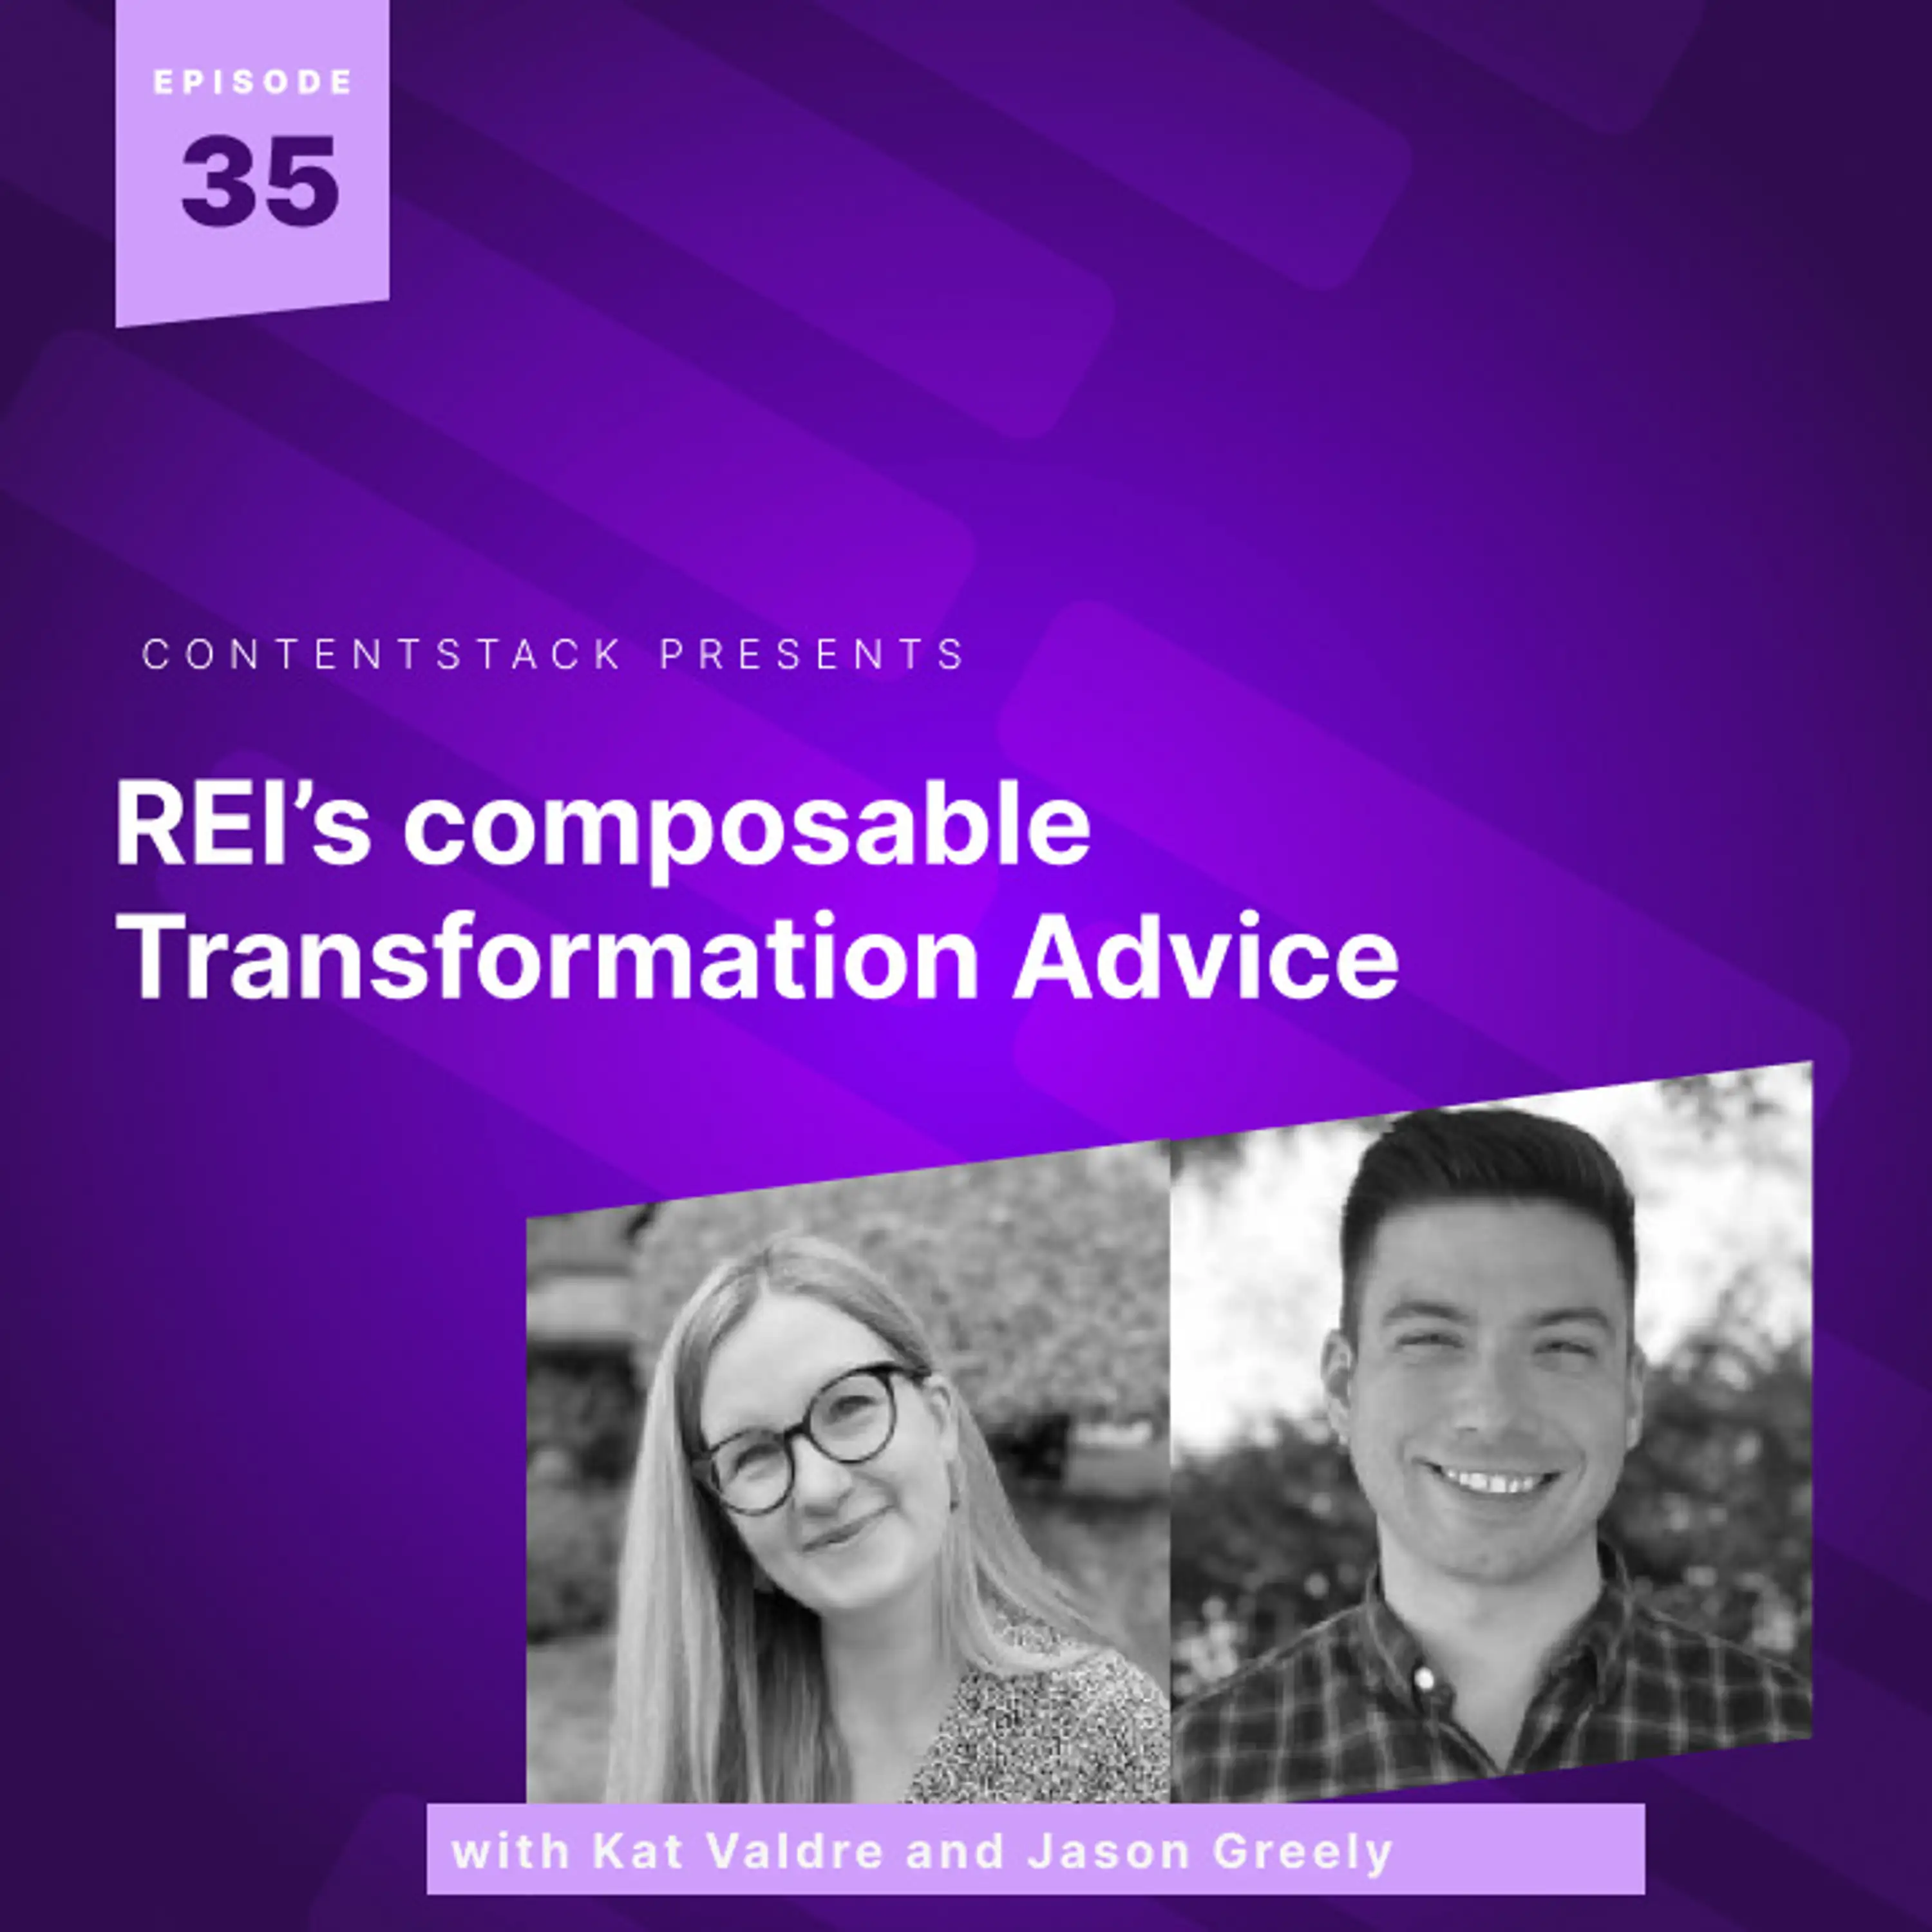 REI's composable transformation advice 